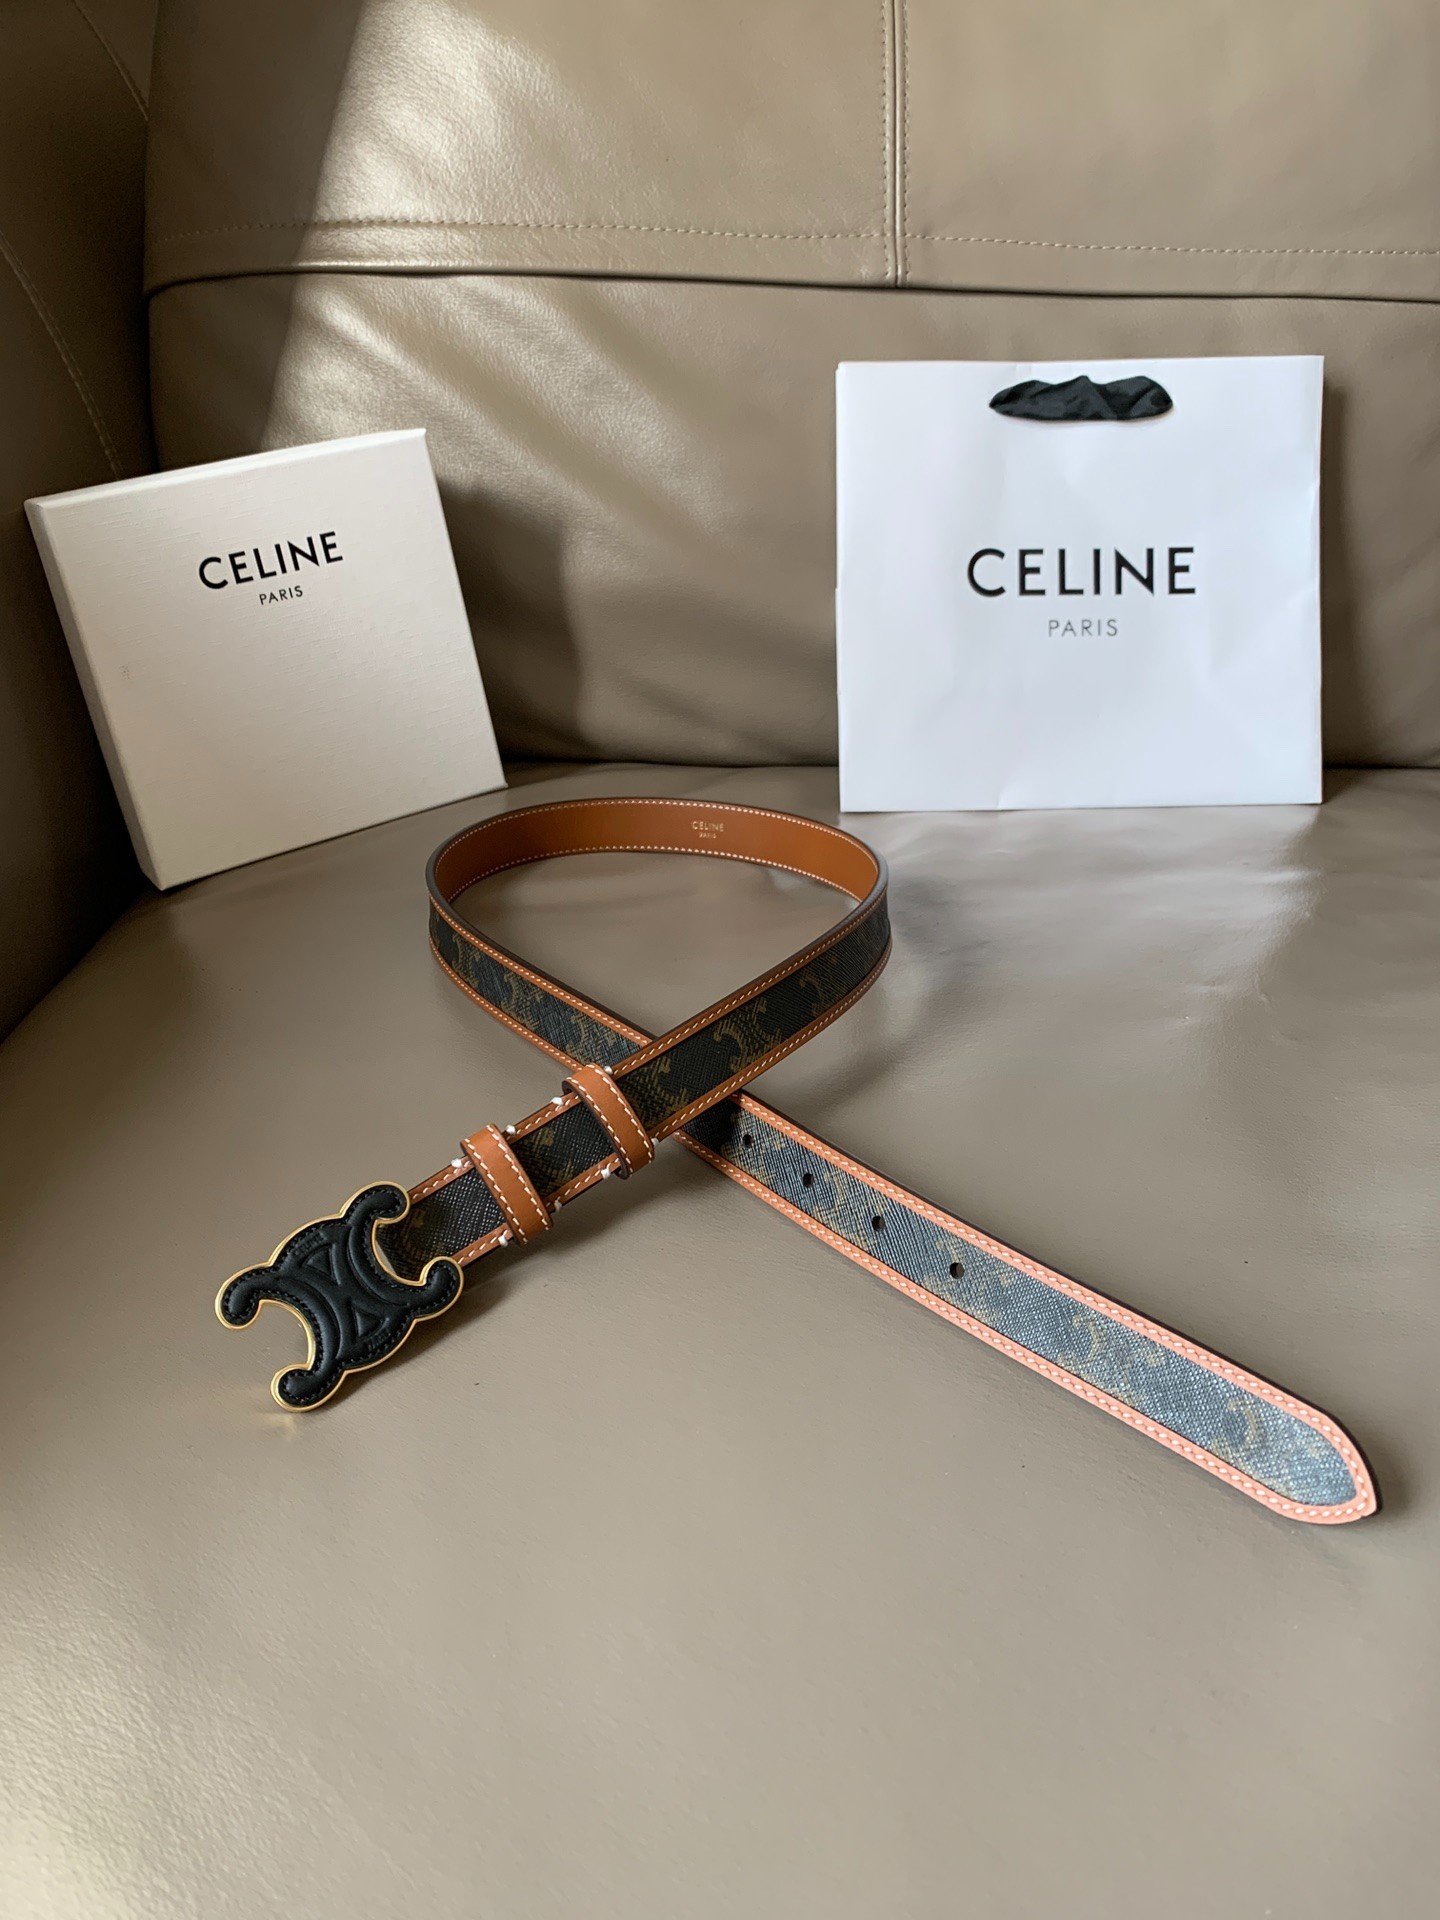 Bảng Màu Thắt Lưng Celine Khóa Đồng Veneer Siêu Cấp Size 2.5cm